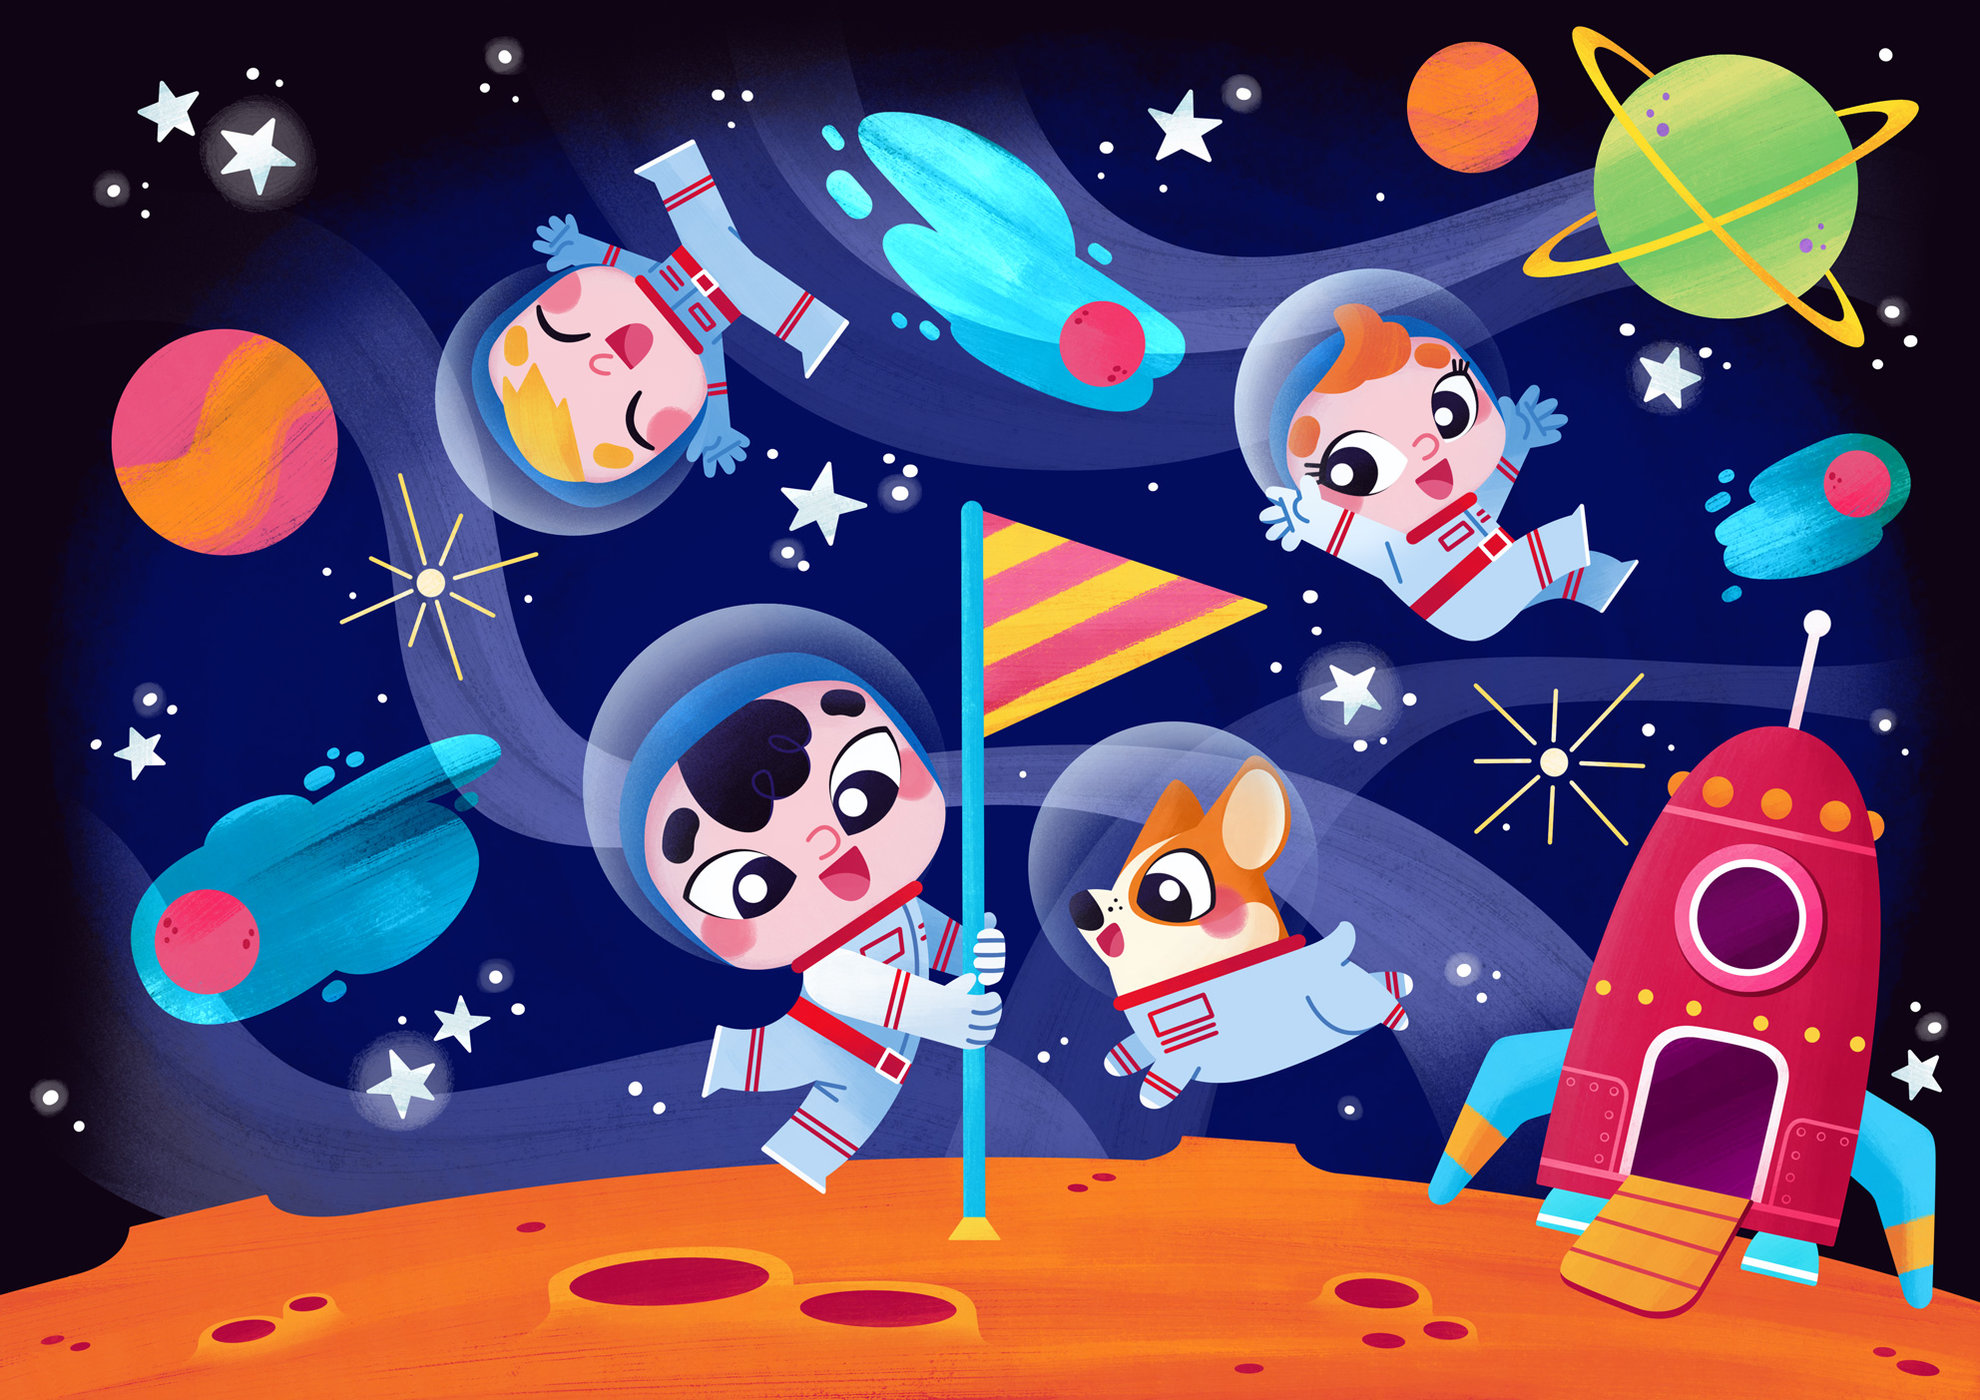 Little spacekids' adventure